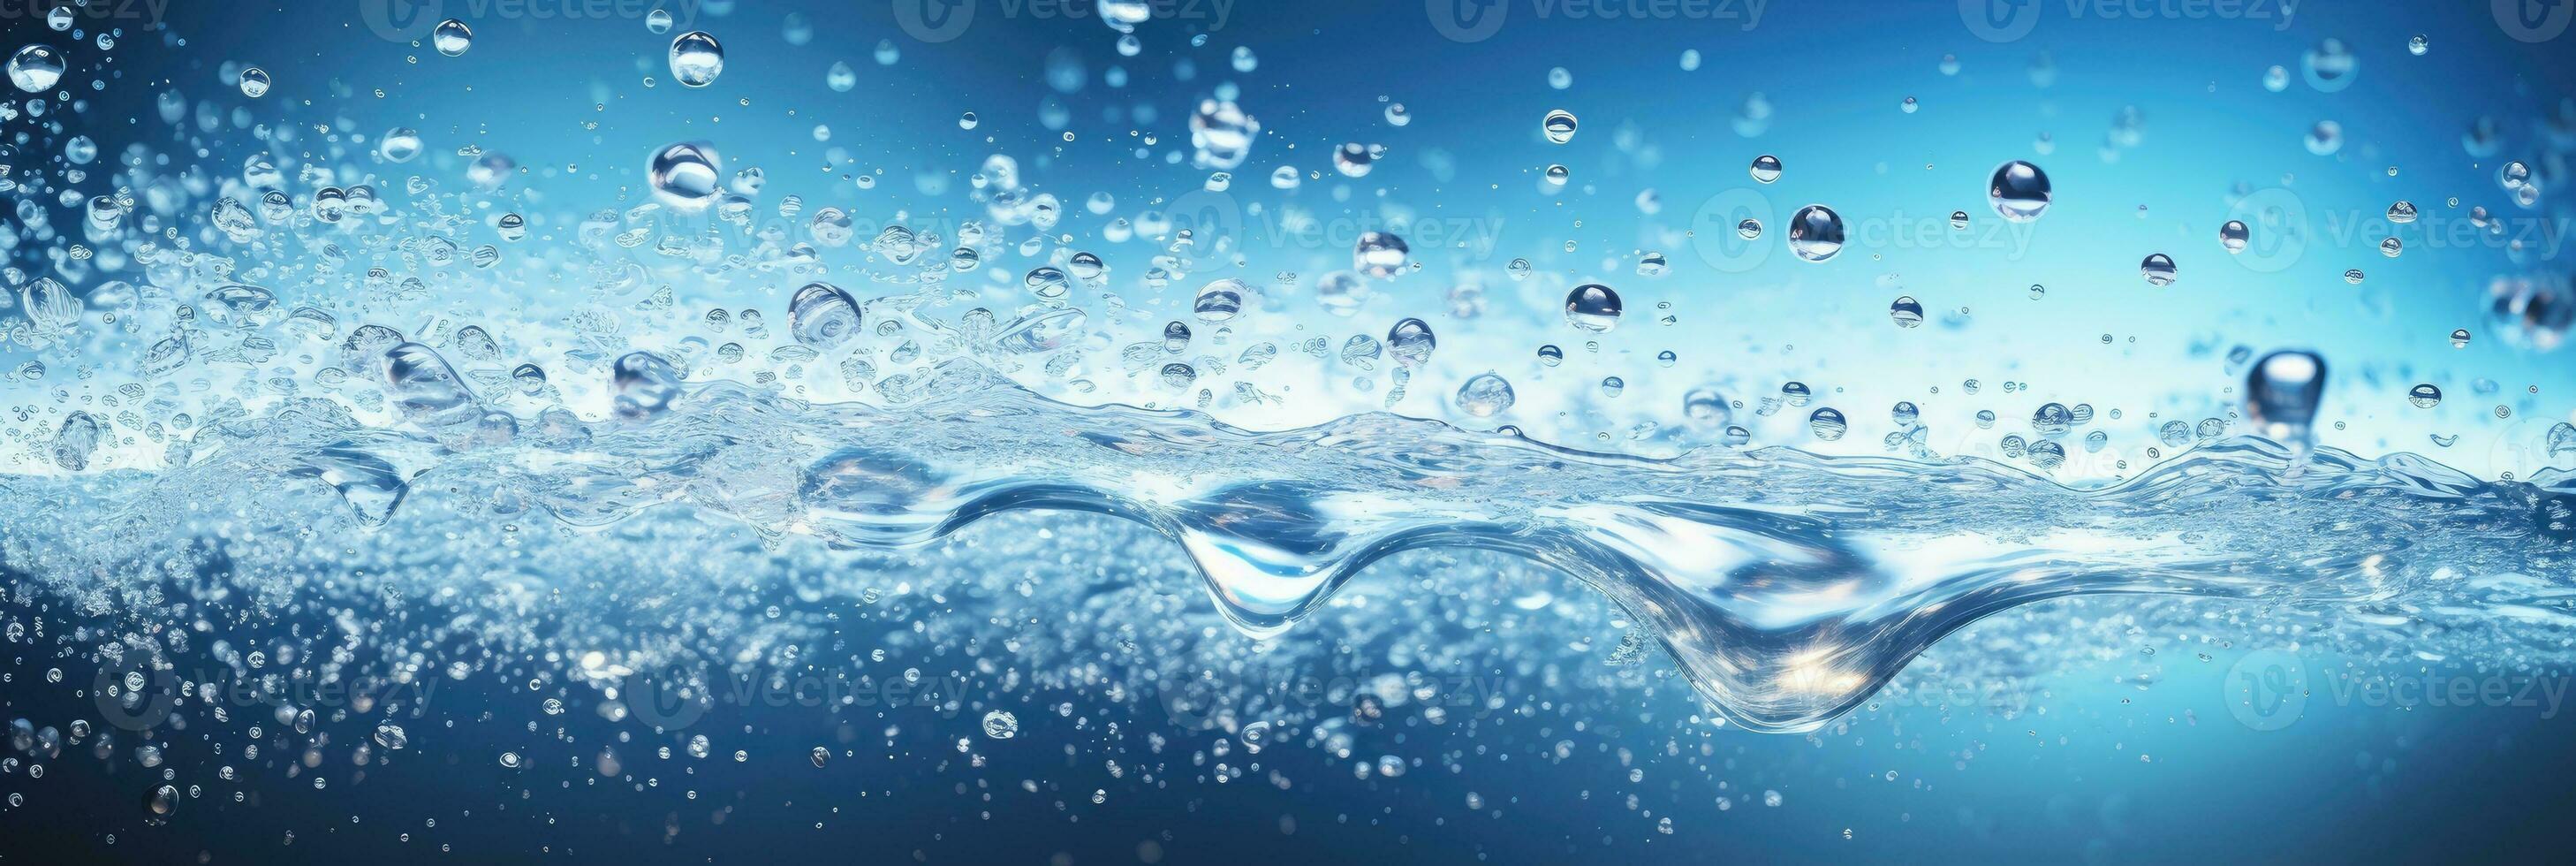 Closeup of bubbling water with water drops splashing up photo